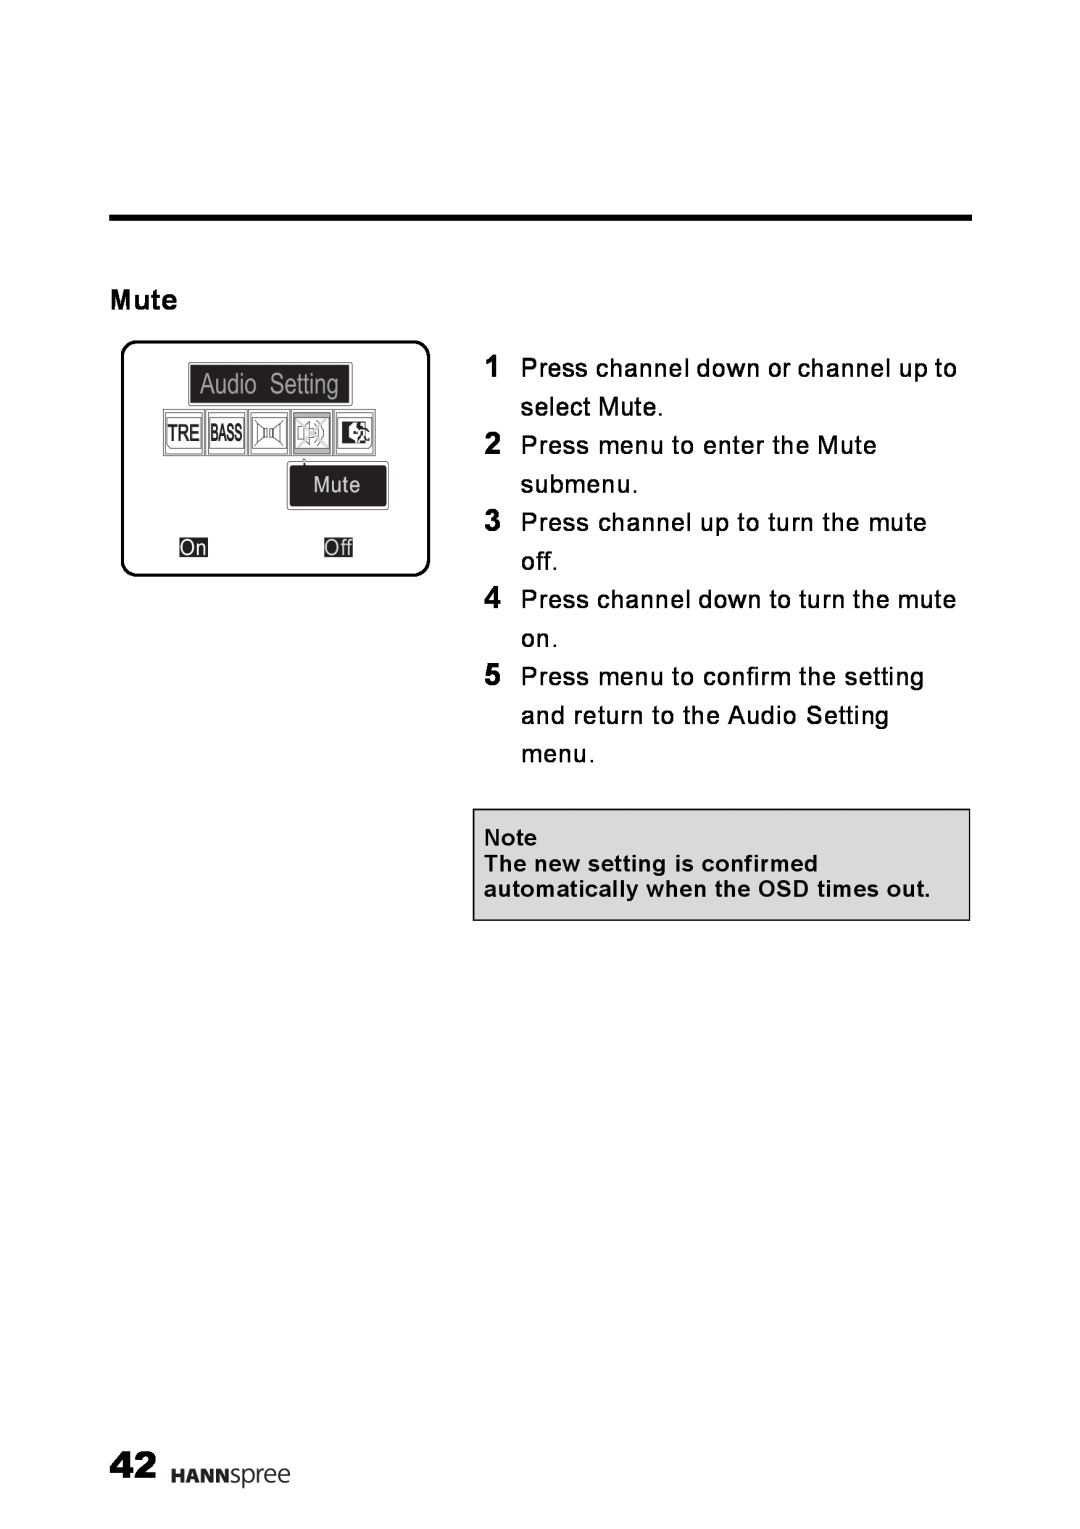 HANNspree LT09-10U1-000 user manual Mute, Audio, Setting 